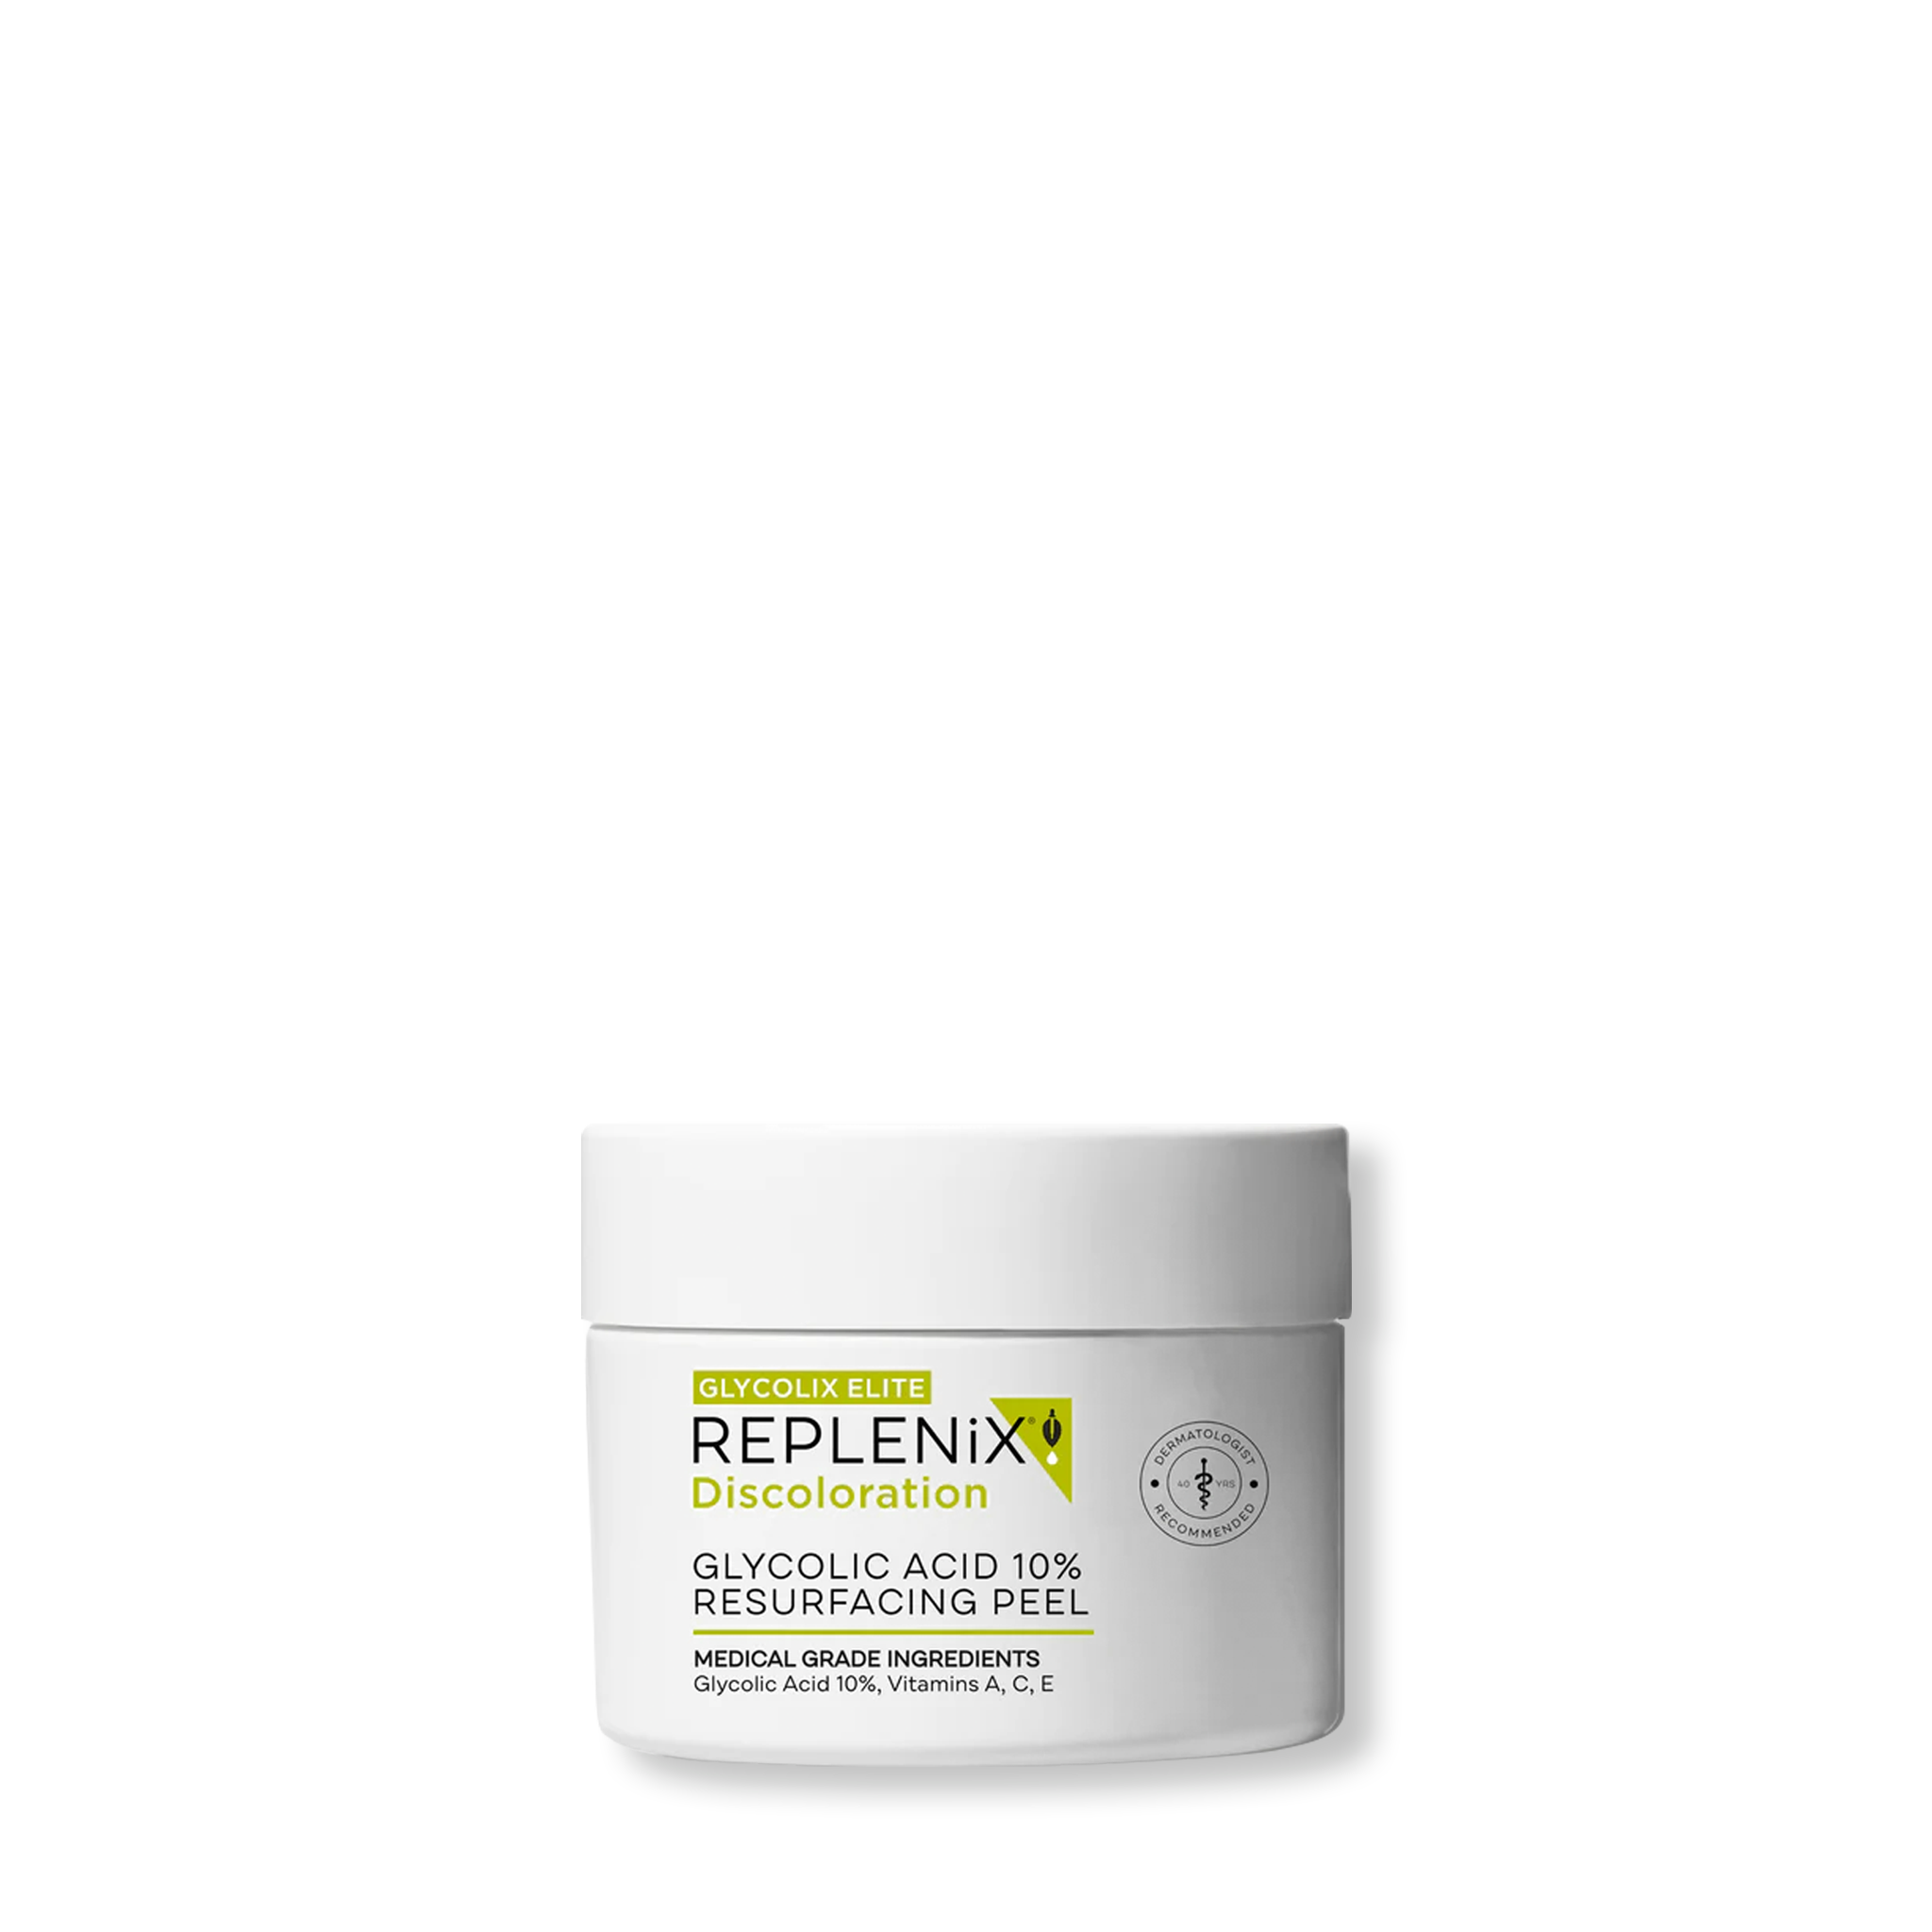 Replenix Glycolic Acid 10% Resurfacing Peel